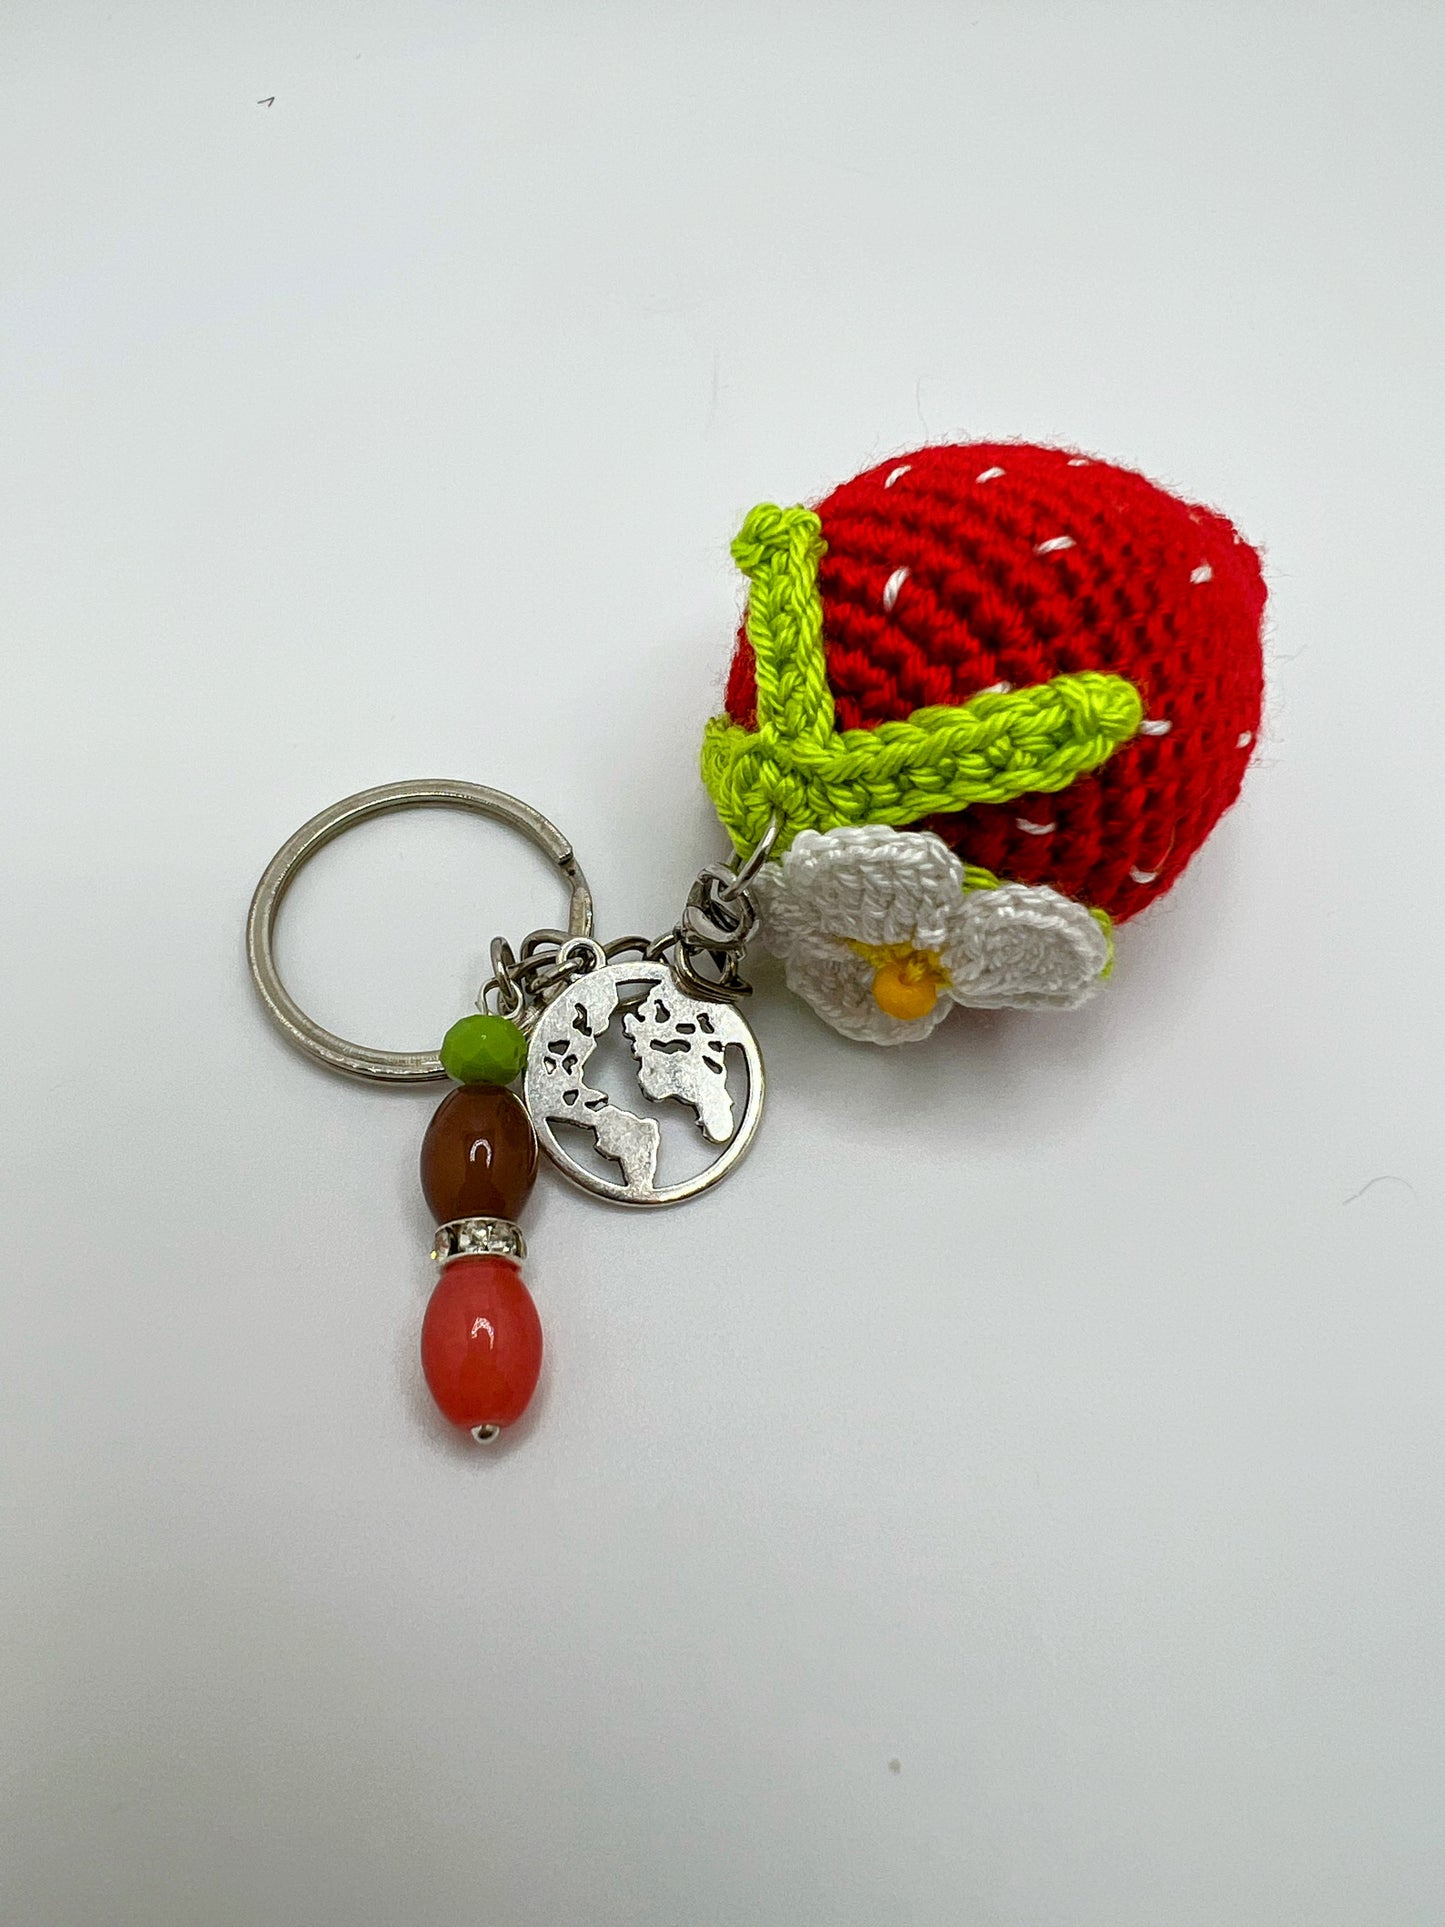 Stuffed Strawberry  Keychain - Crochet Knitted Amigurumi Toy